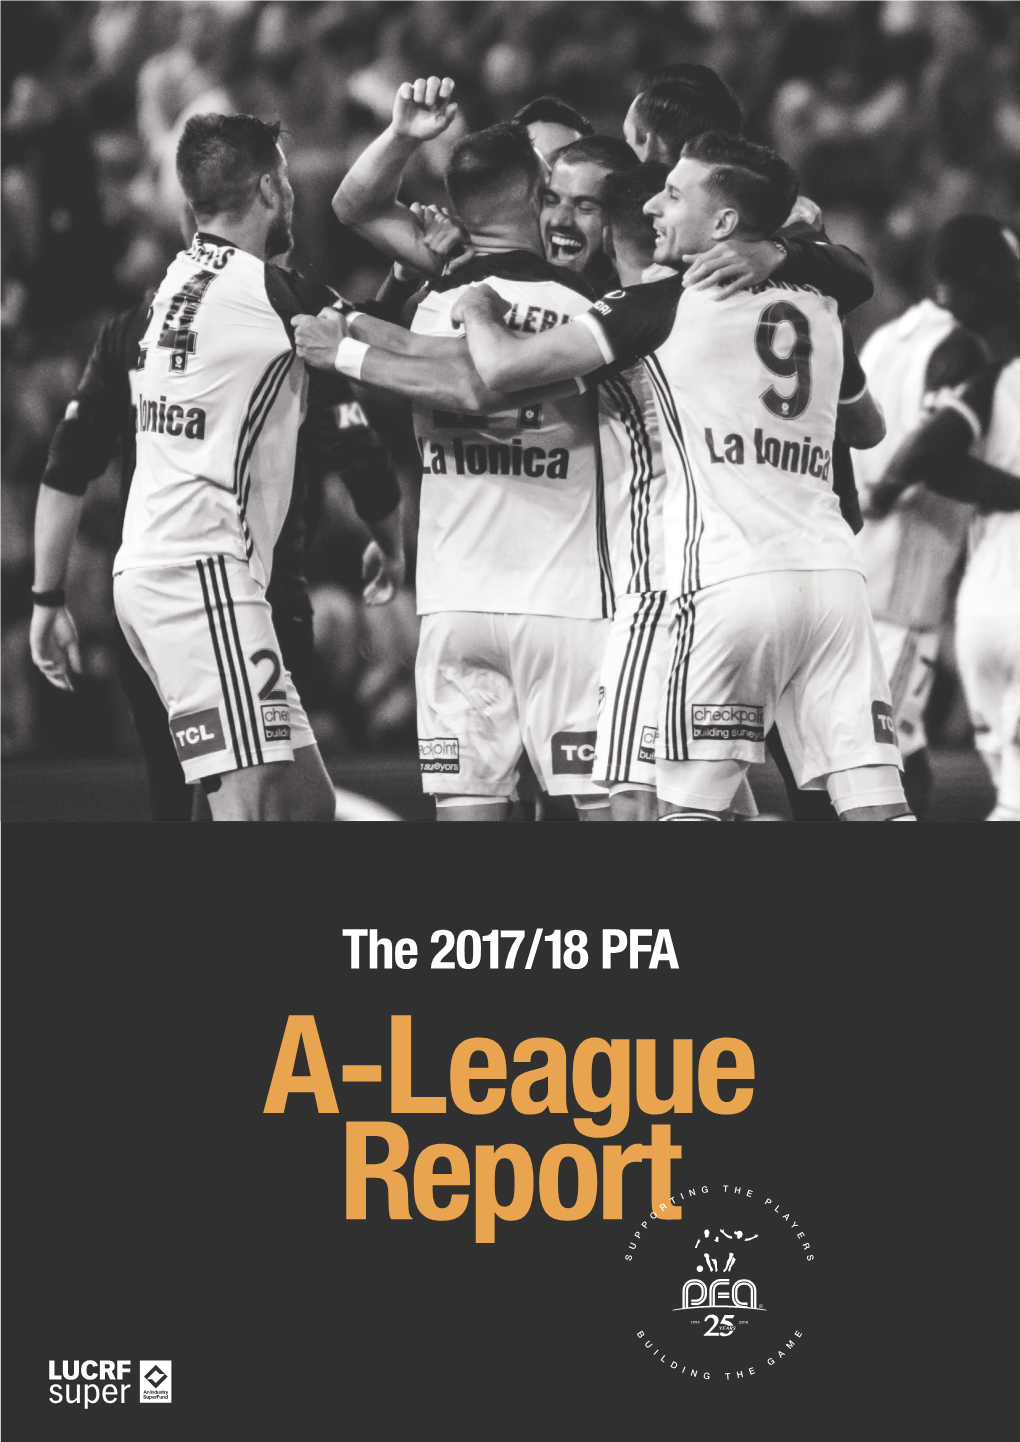 The 2017/18 PFA A-League Report A-League Foreword